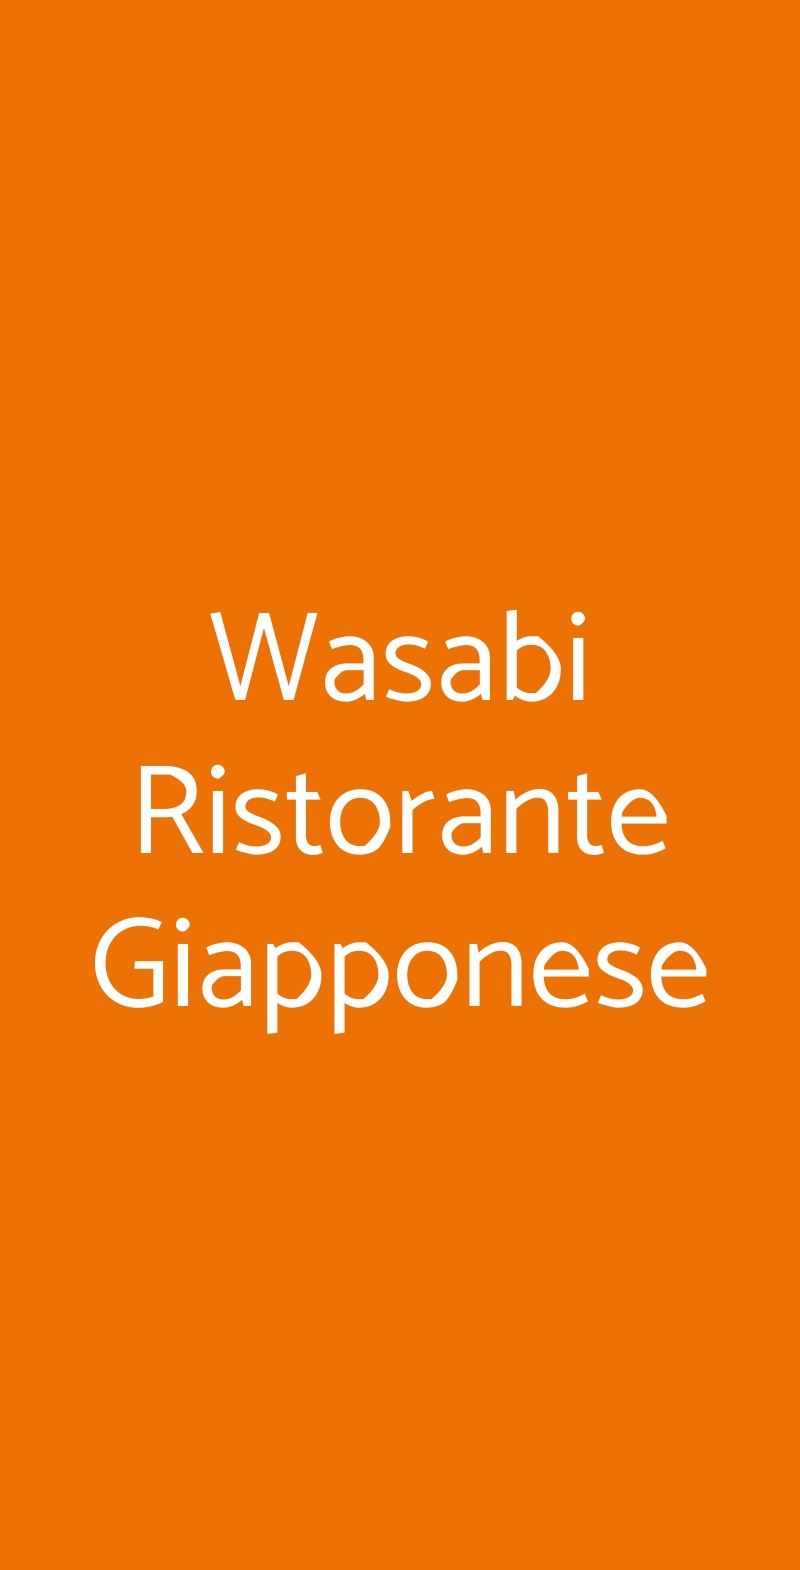 Wasabi Ristorante Giapponese Firenze menù 1 pagina